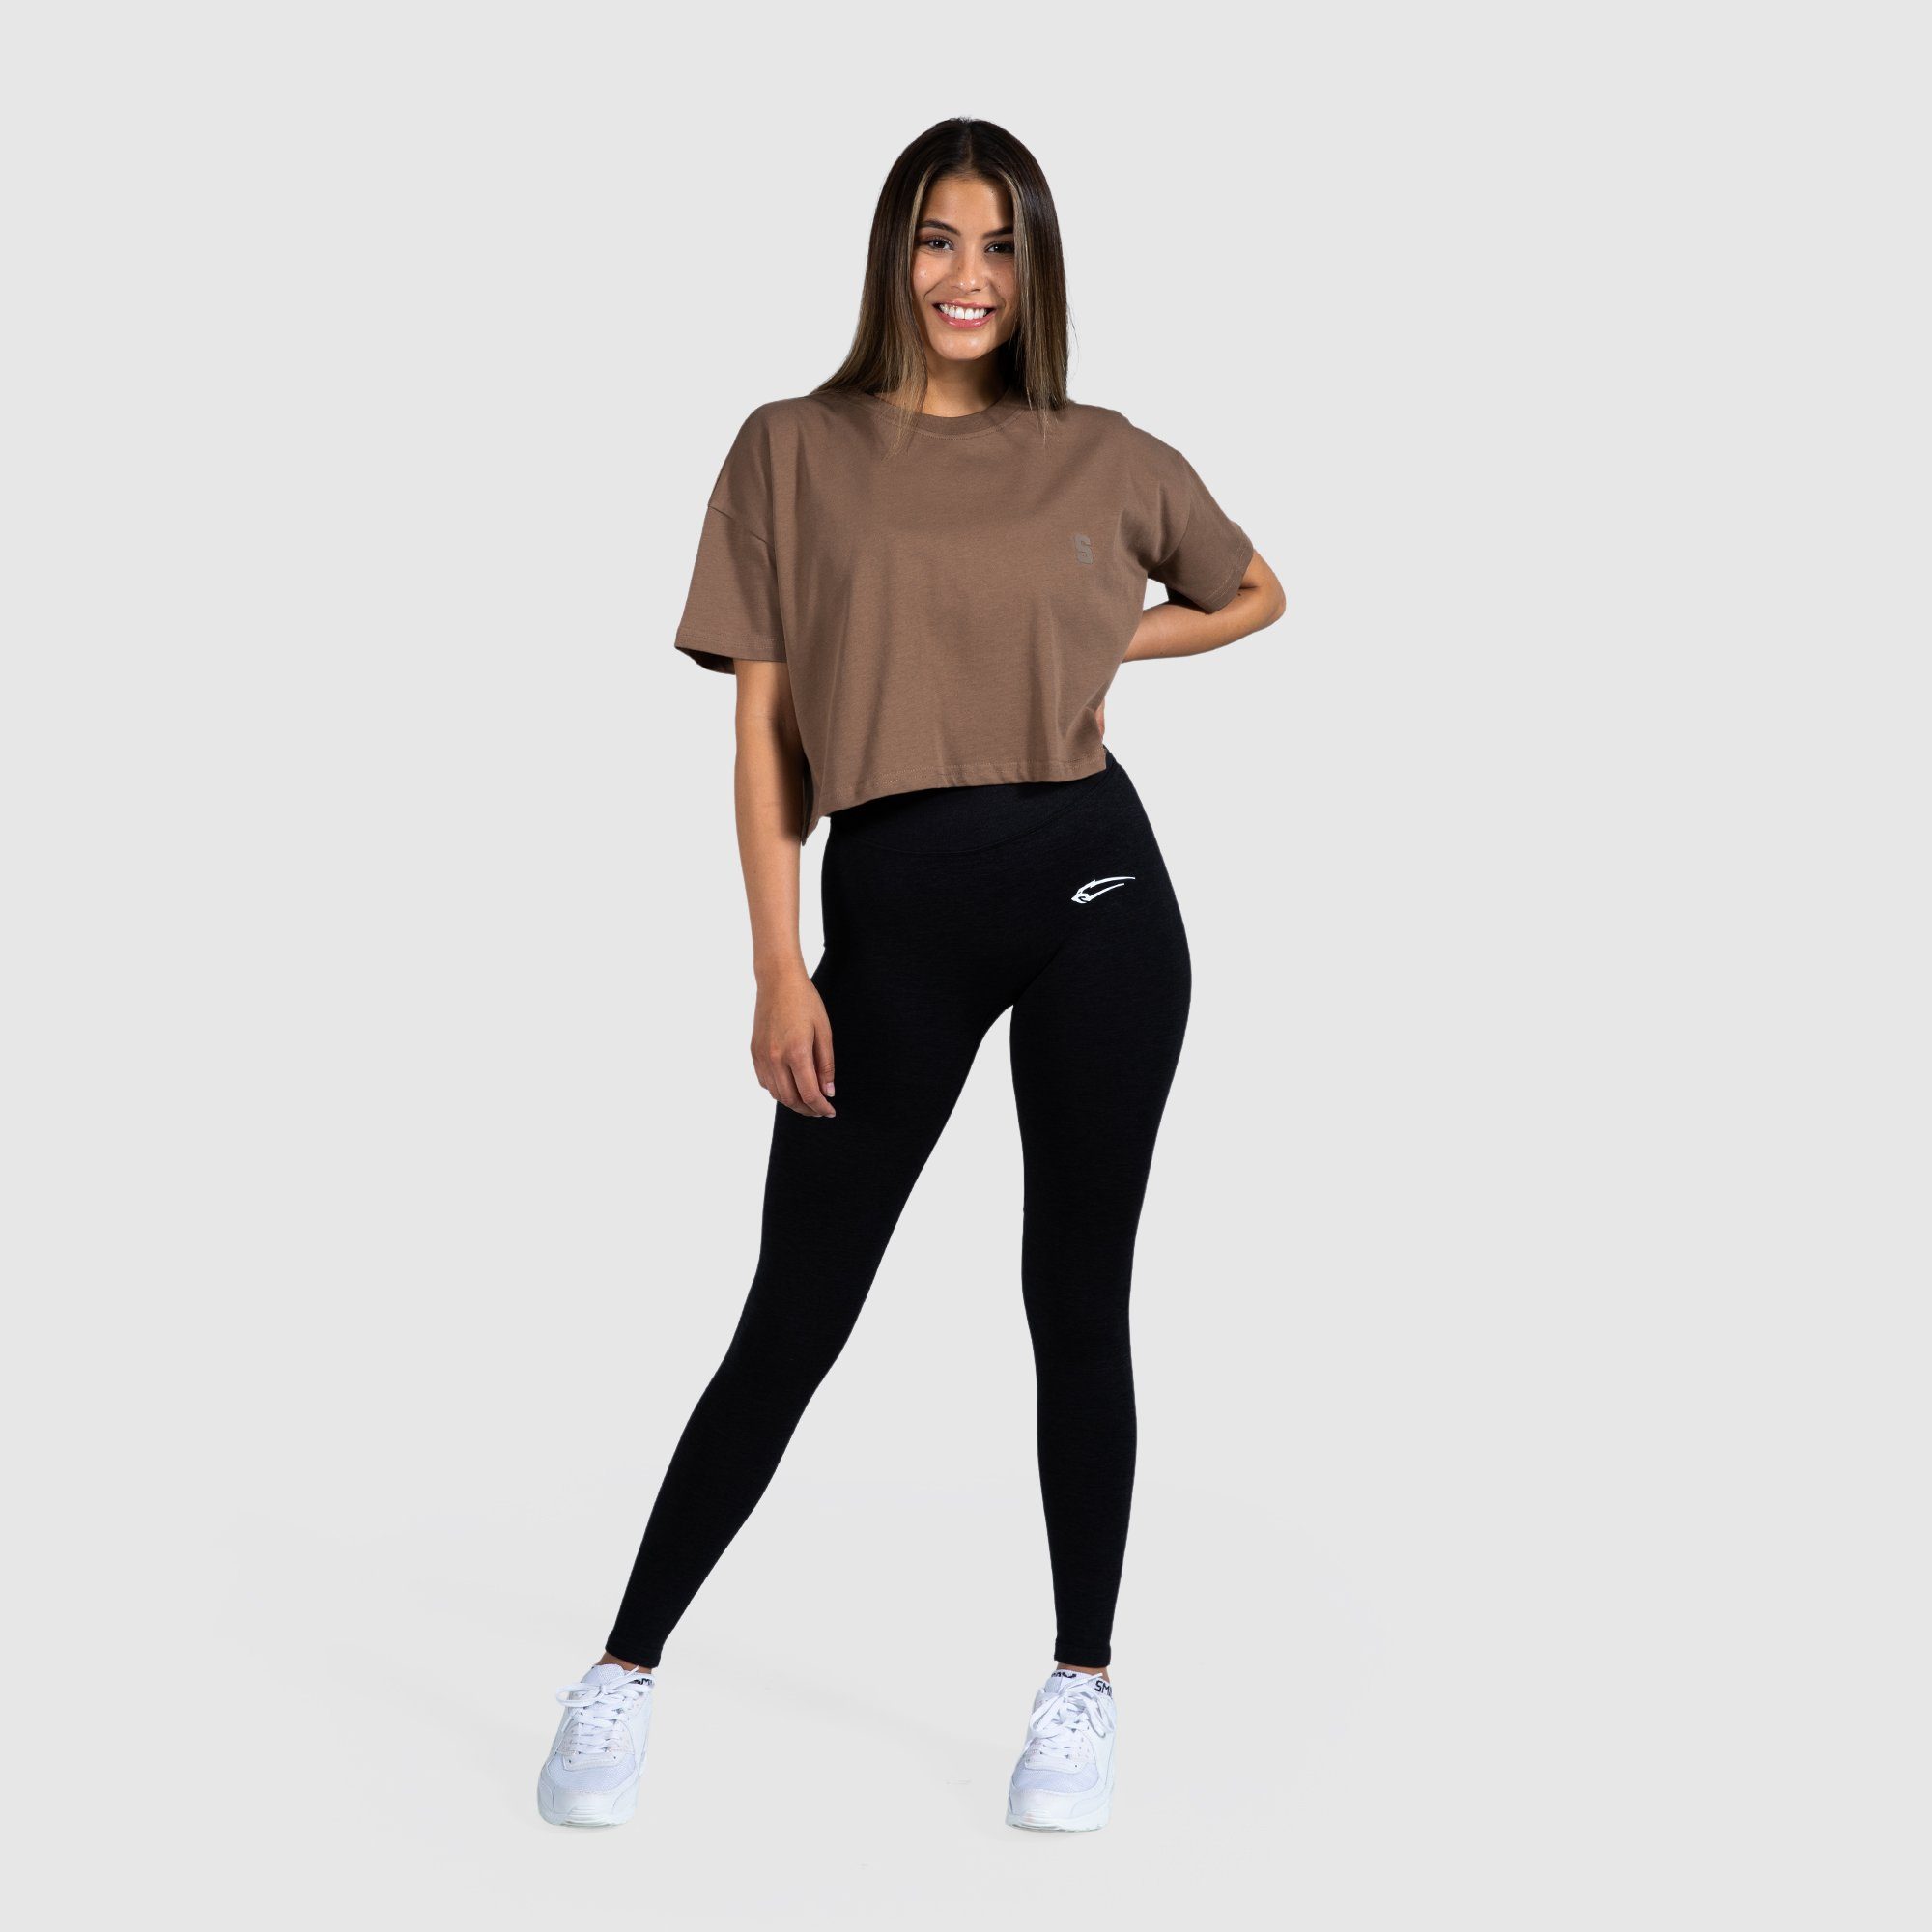 Smilodox T-Shirt 100% Baumwolle Oversize, Marleen Braun